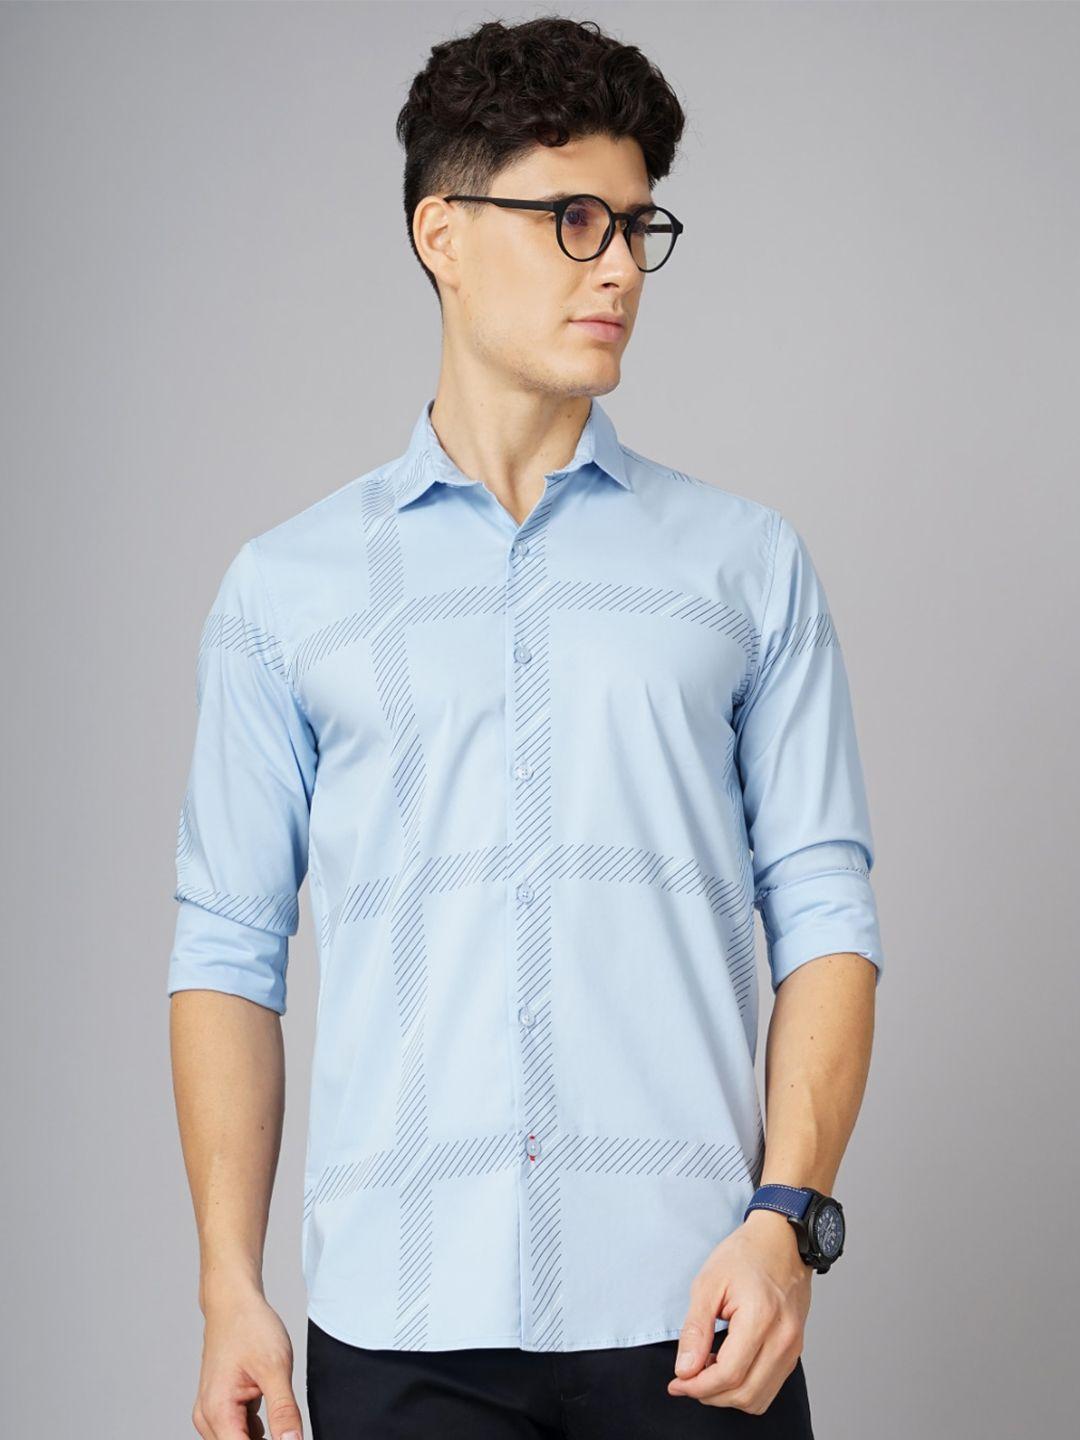 paul street standard slim fit geometric printed cotton casual shirt